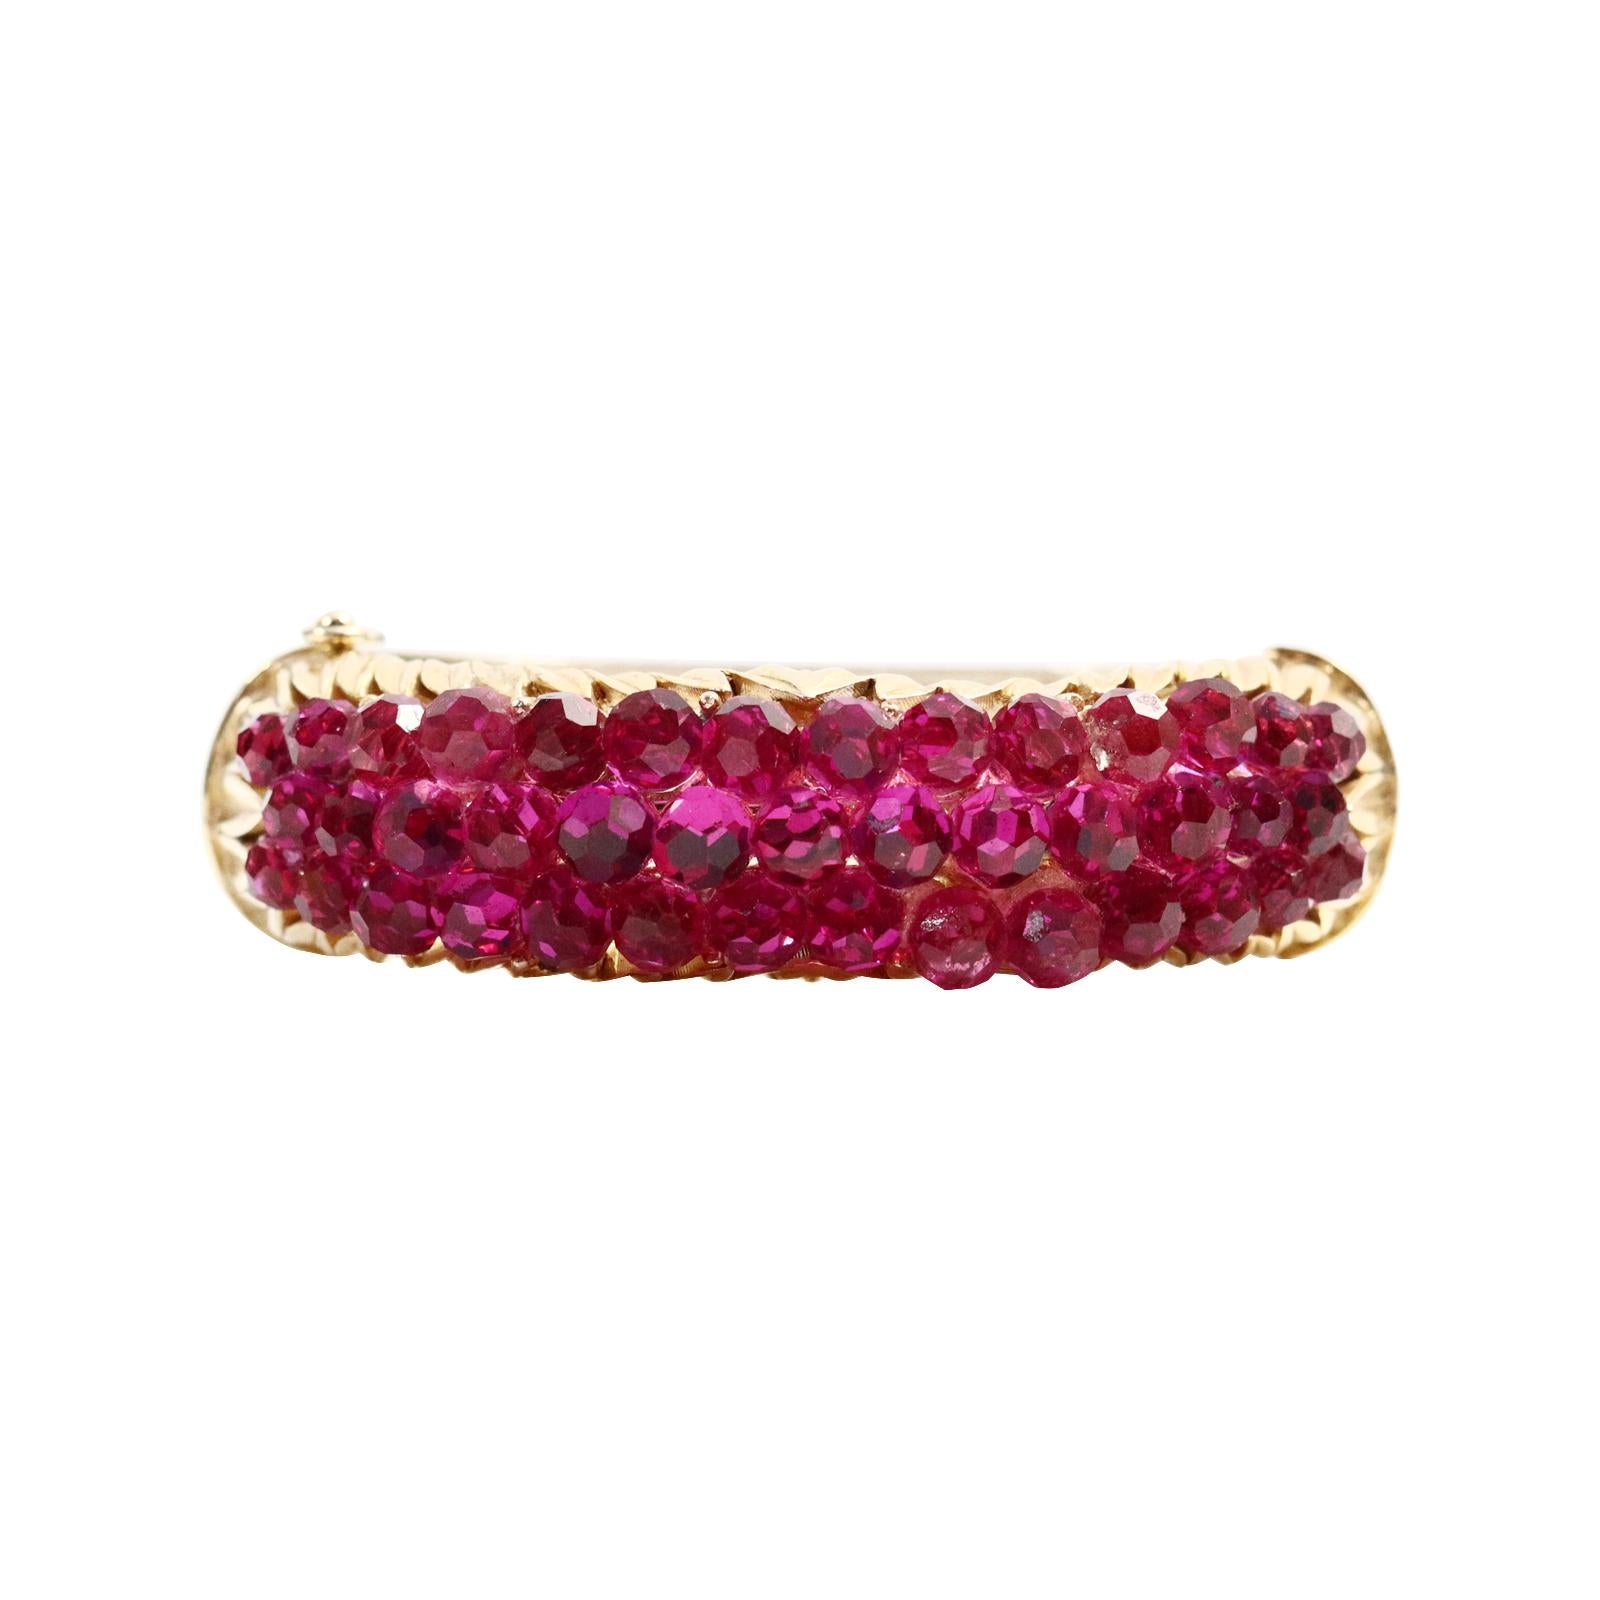 Trifari Goldfarbenes Vintage-Armband mit rosa Perlen, ca. 1980er Jahre (Moderne) im Angebot